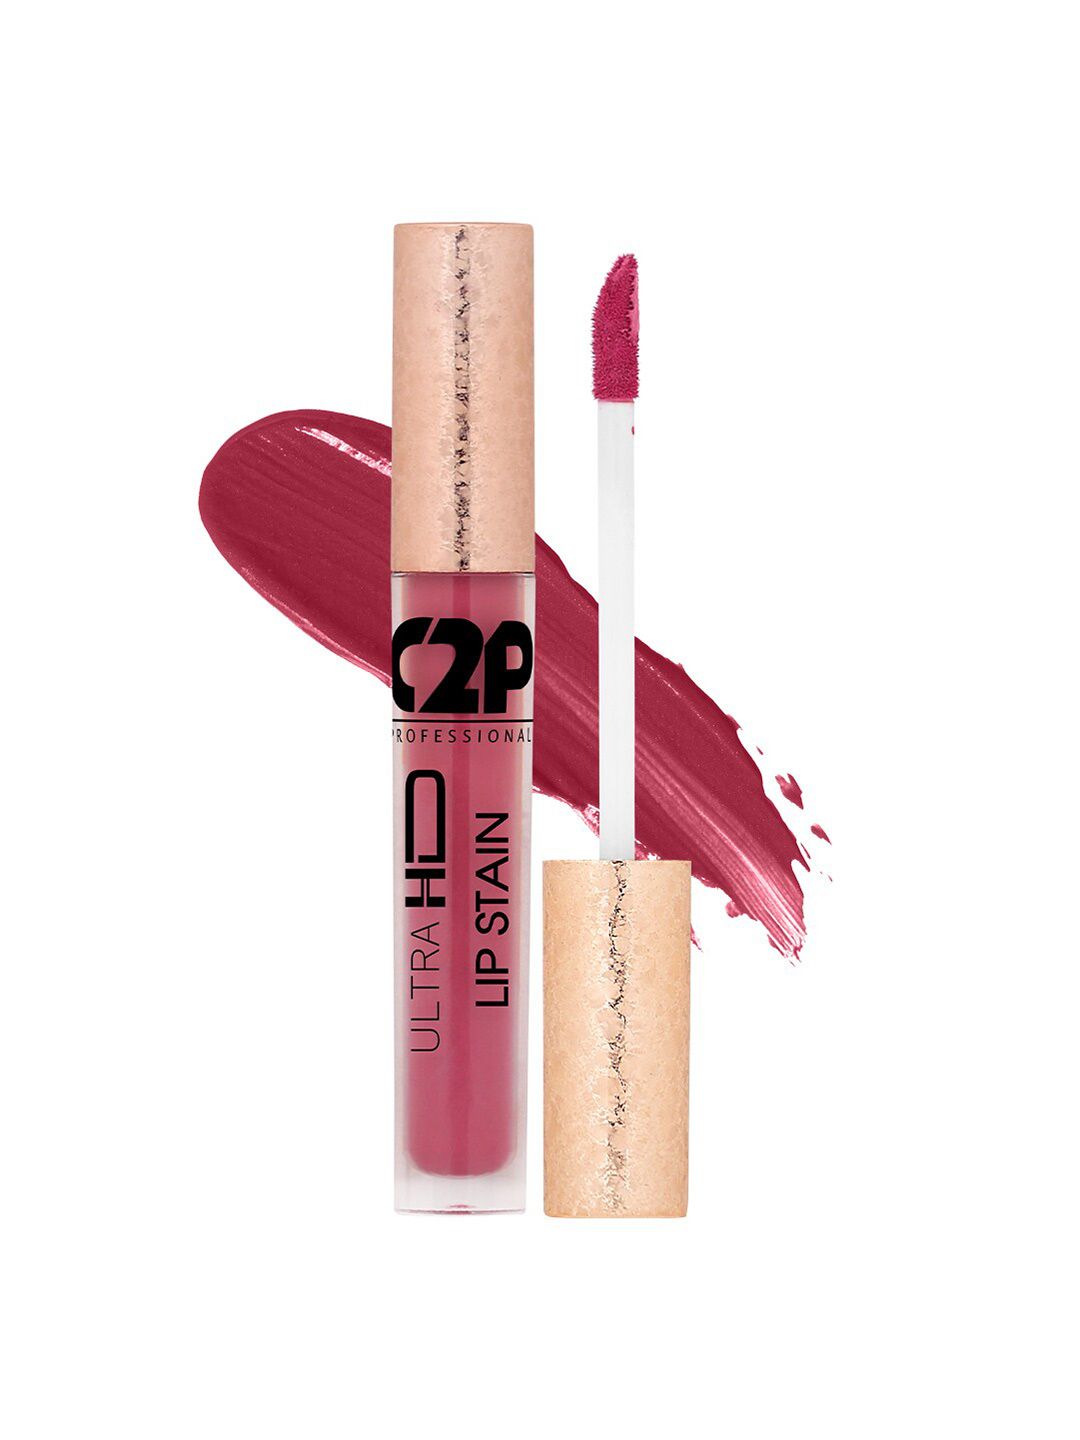 C2P PROFESSIONAL MAKEUP Mauve Lip Stain Liquid Lipstick - Settin' The Stage 09 5 ml Price in India